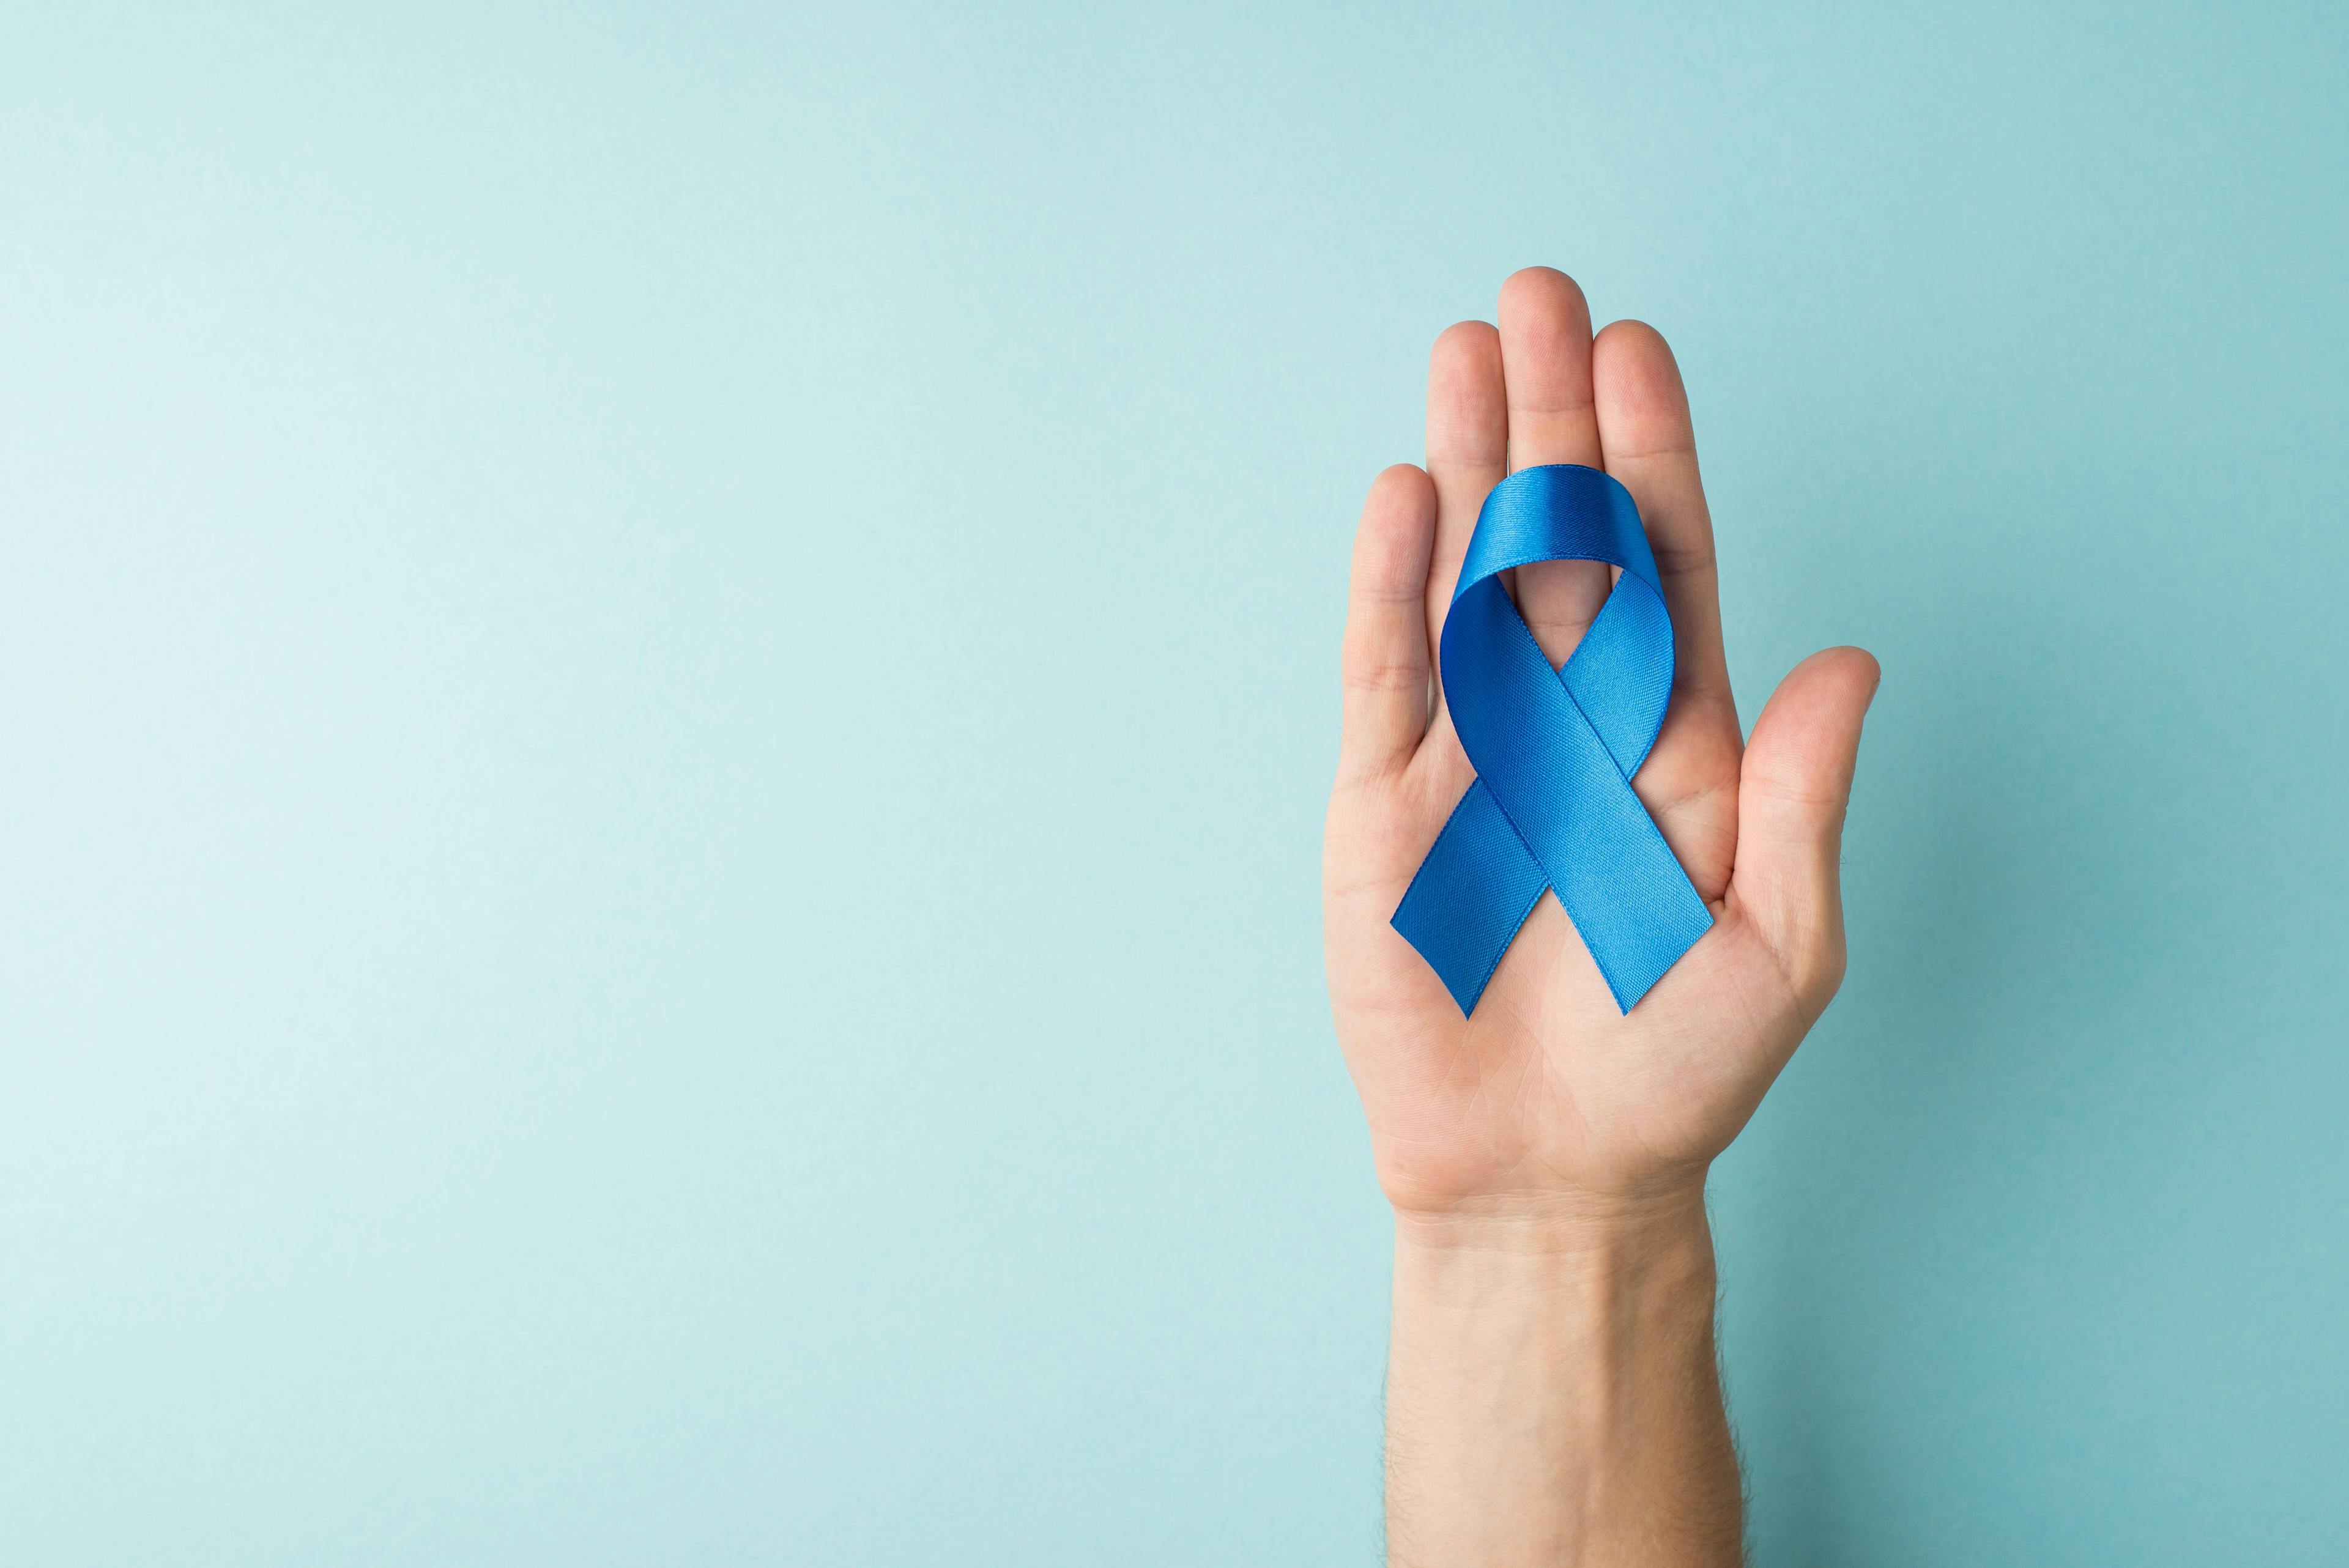 Blue ribbon for prostate cancer awareness -- Image credit: ActionGP | stock.adobe.com